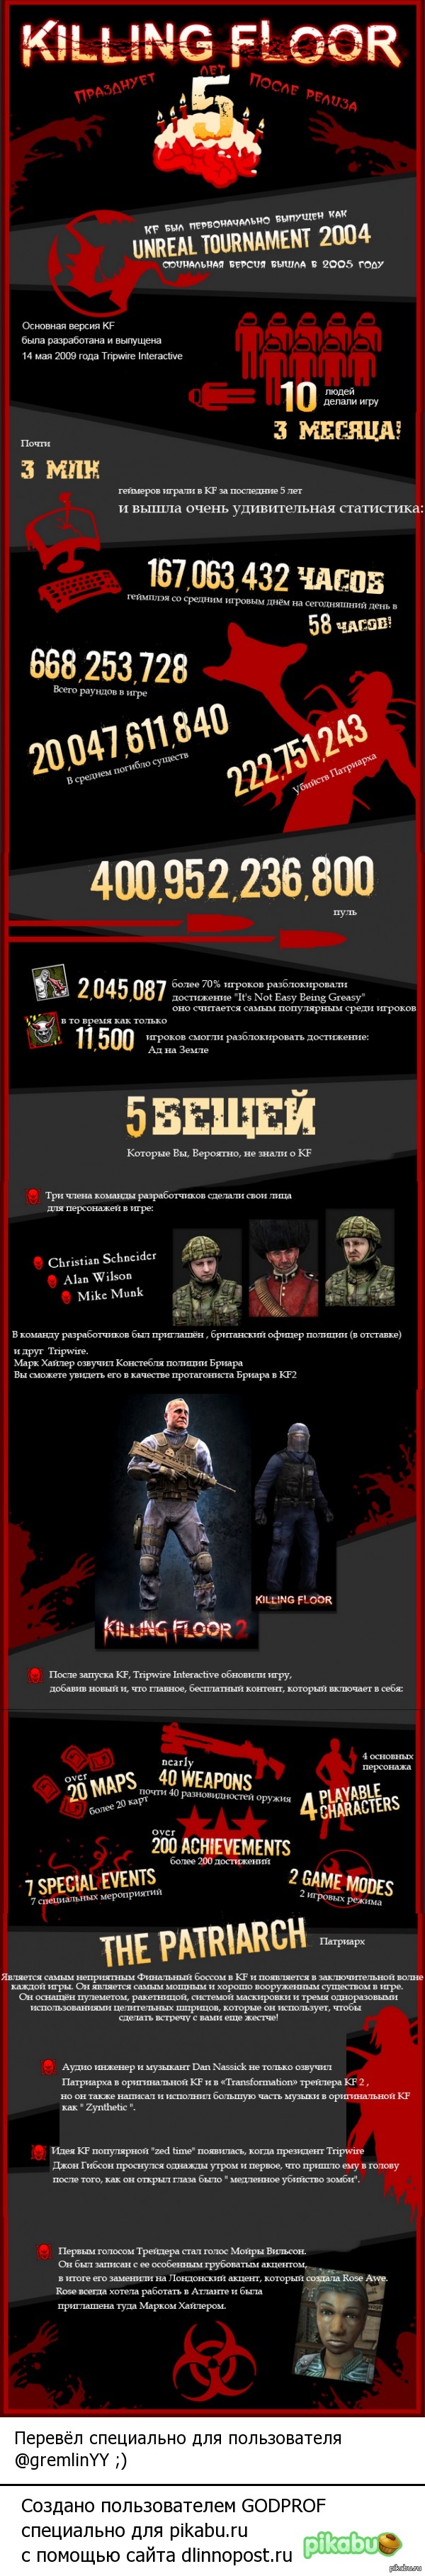 Killing Floor  5     [RUS]  : <a href="http://pikabu.ru/story/killing_floor_5_year_anniversary_info_graphic_2275688">http://pikabu.ru/story/_2275688</a>